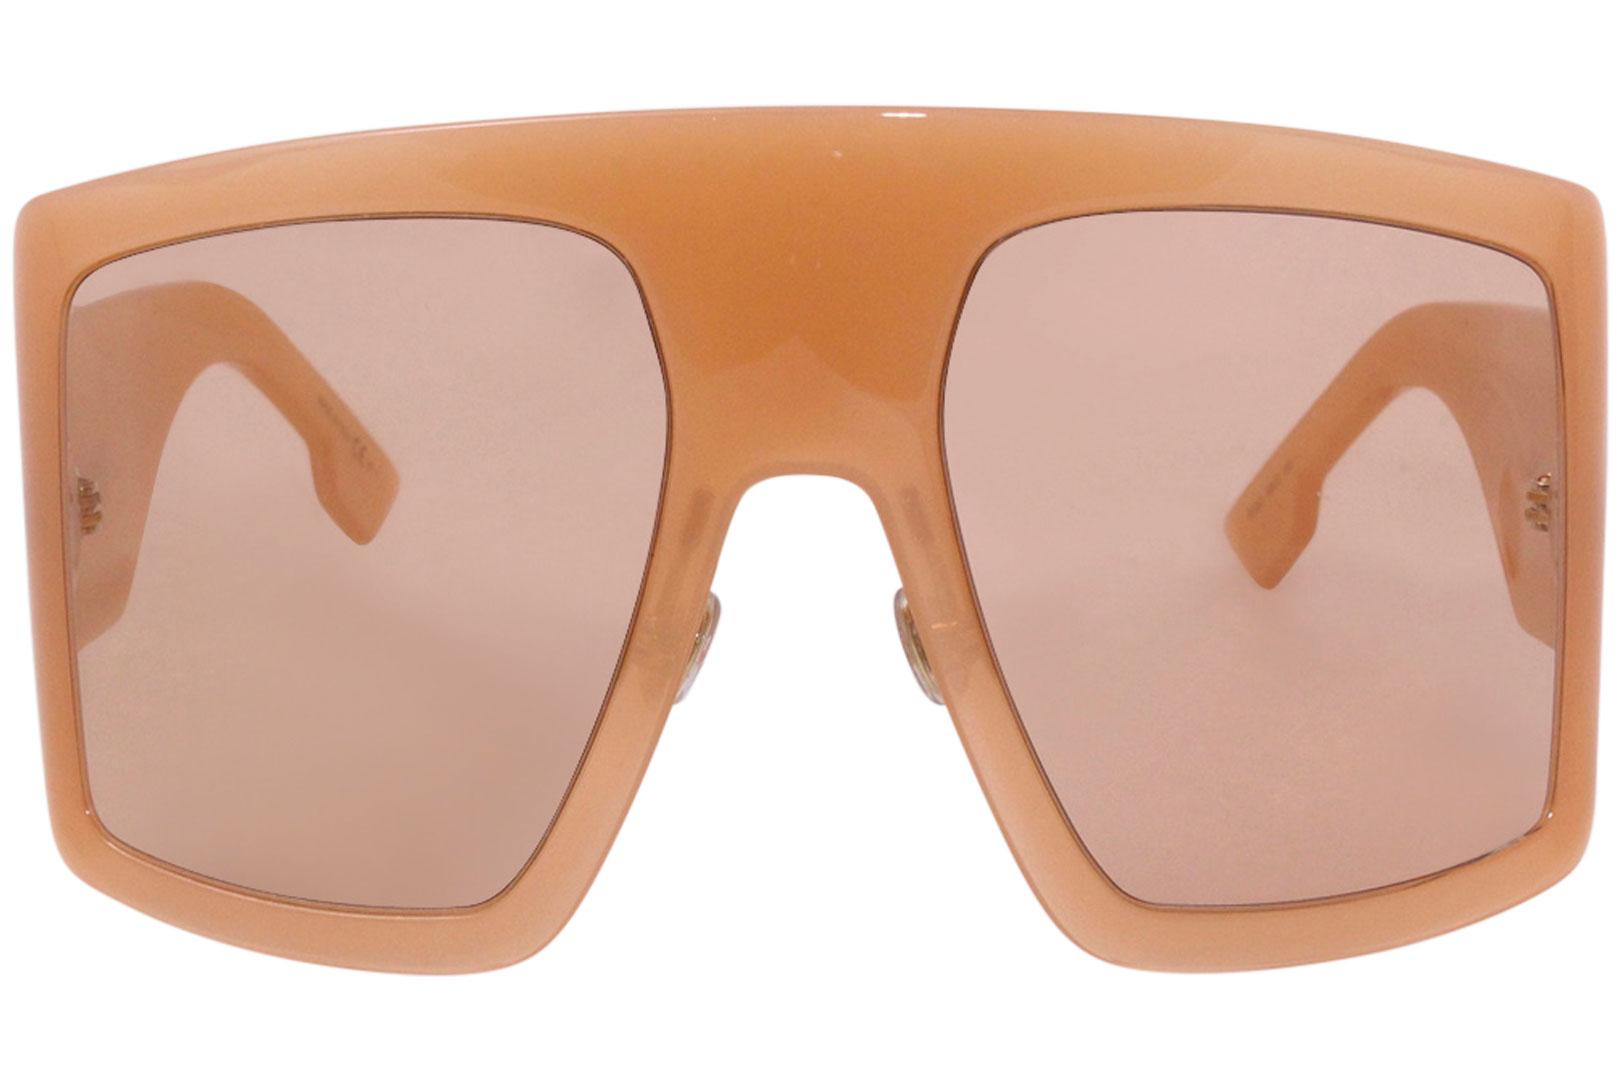 Style OTT: We are crushing on these extravagant sunglasses 